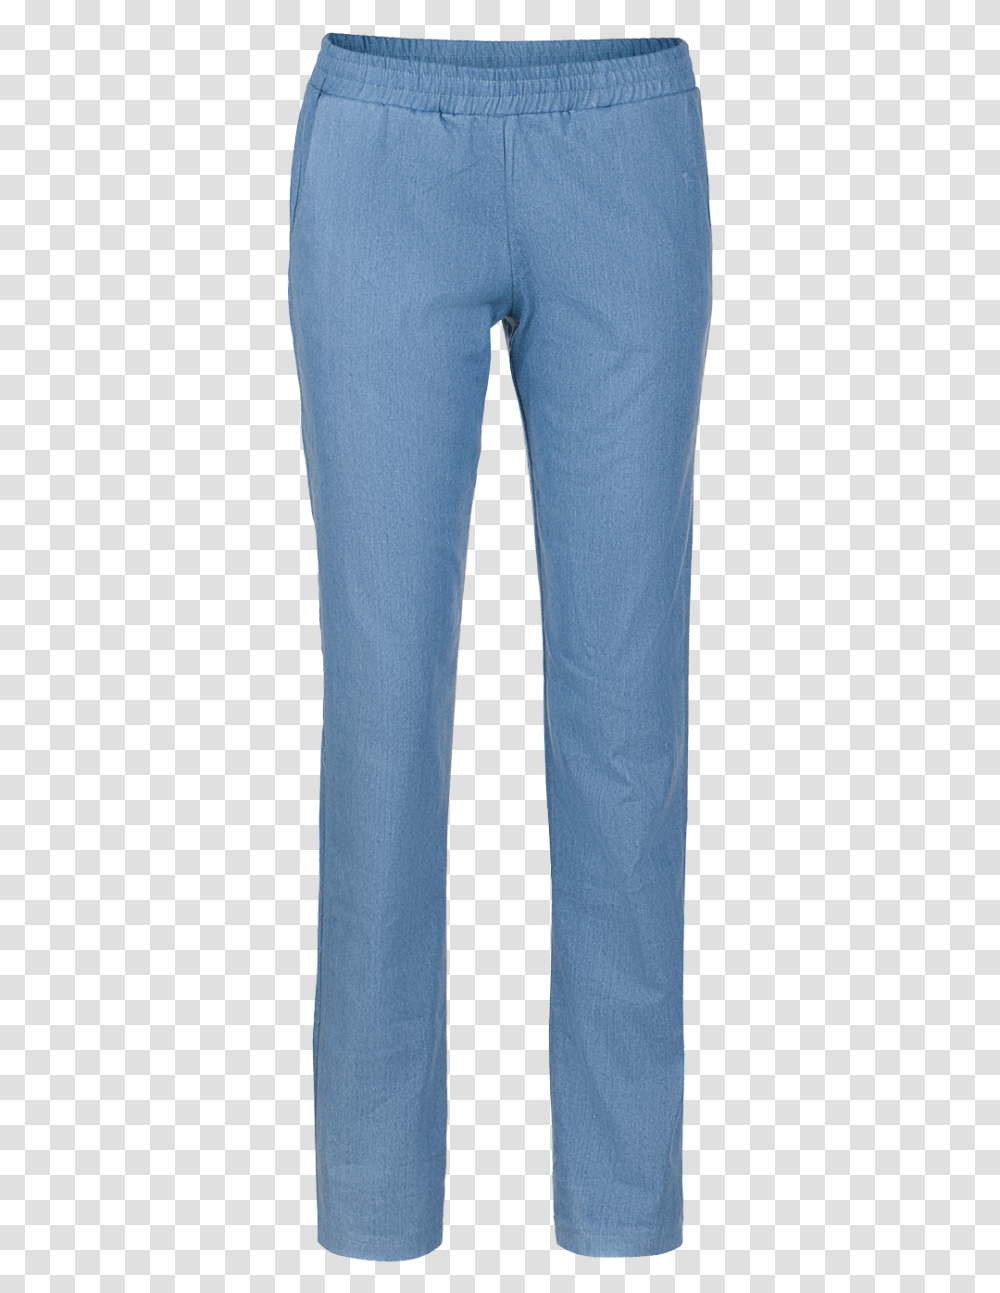 Clip Art Ellie Maare Pocket, Pants, Apparel, Jeans Transparent Png